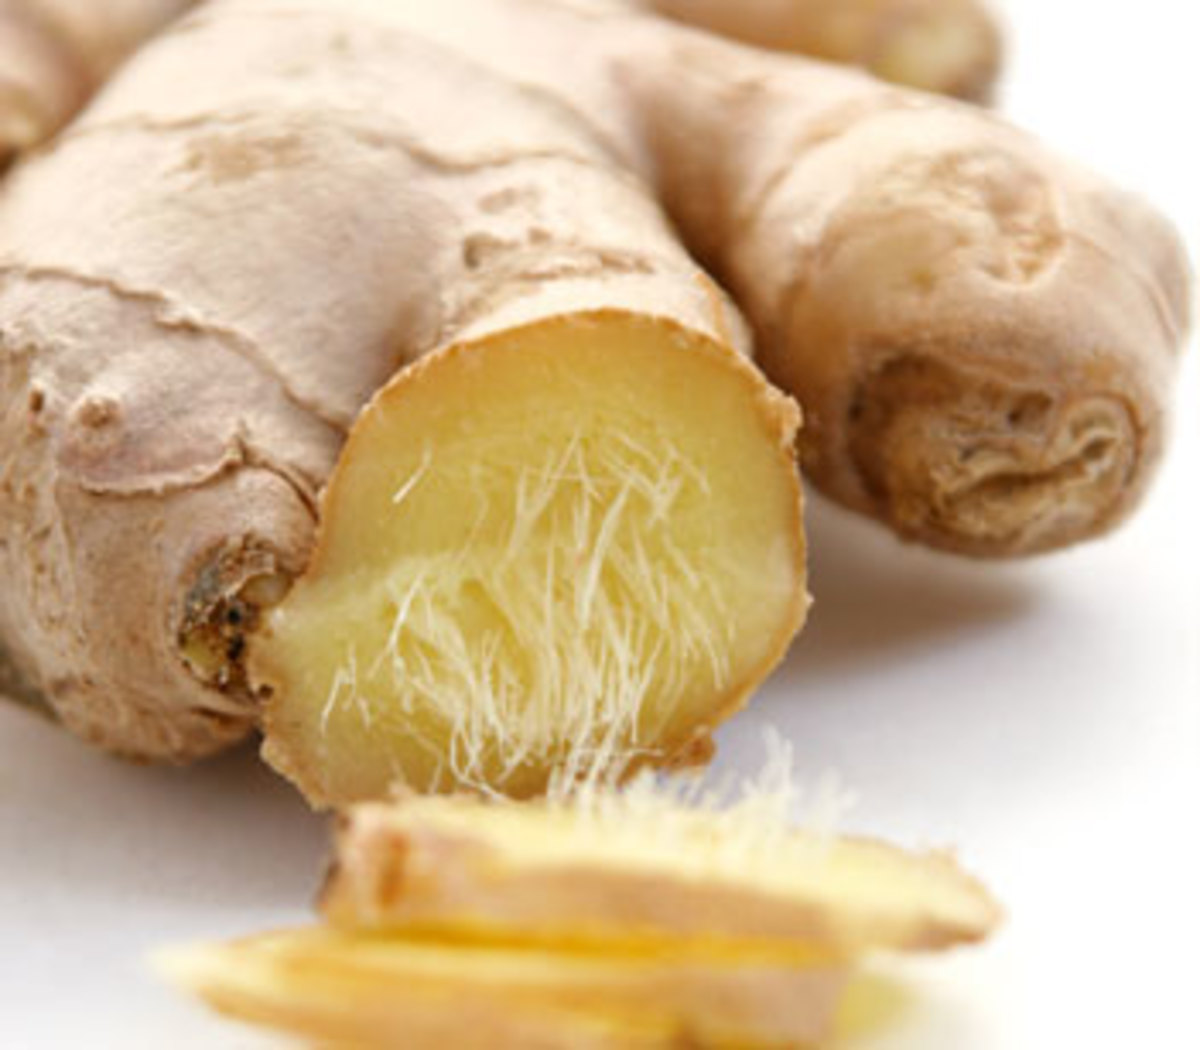 Ginger is anti-inflammatory.